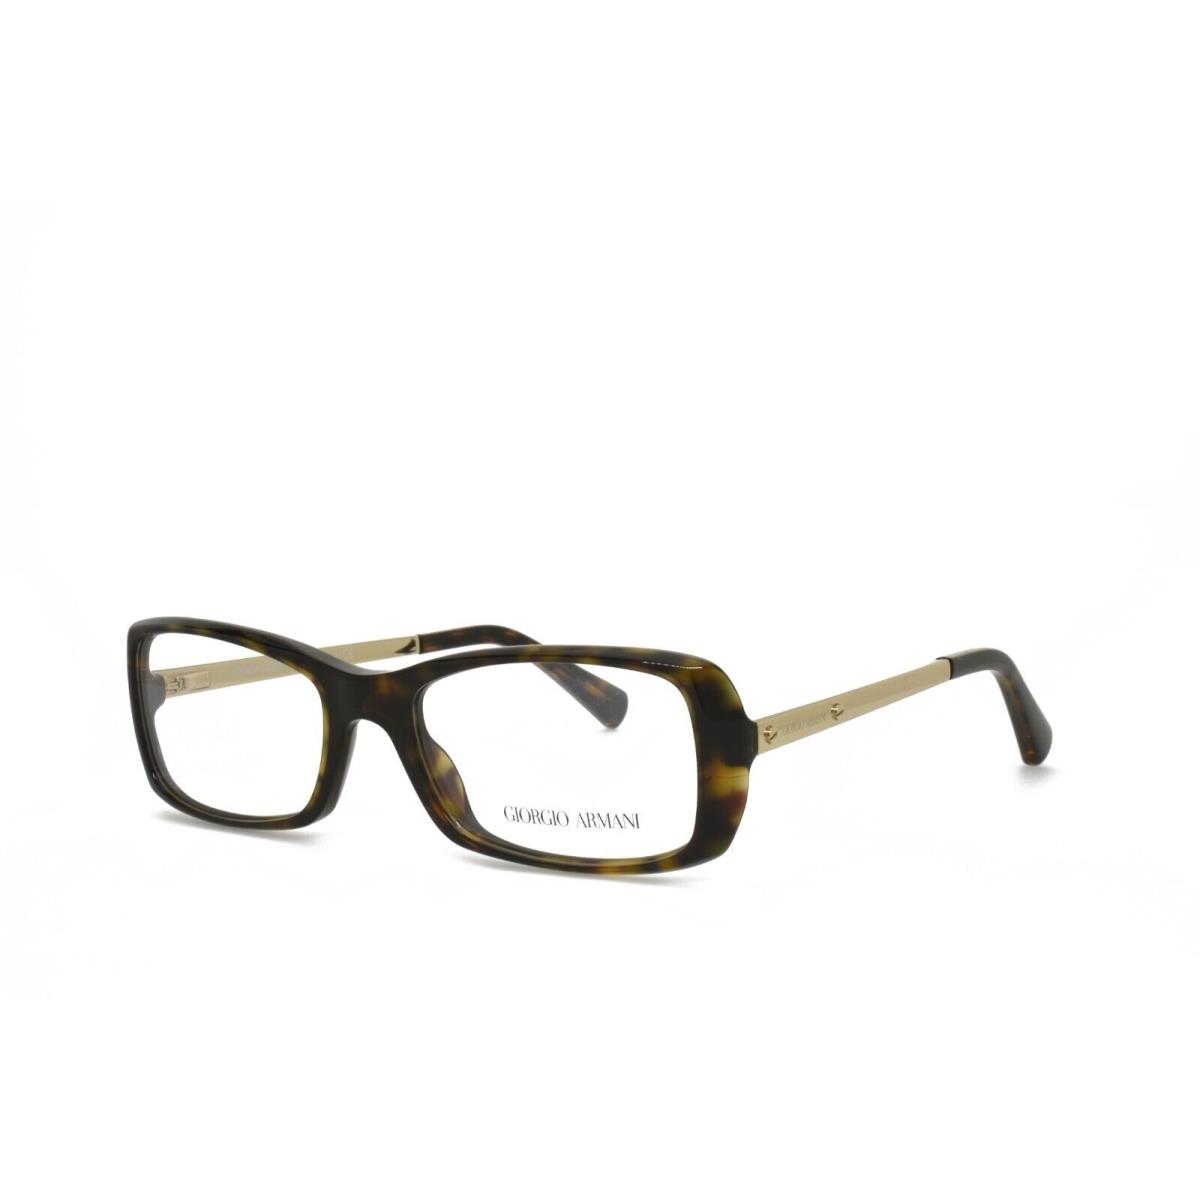 Giorgio Armani 7011 5026 51-17-135 Tortoise Eyeglasses Frames